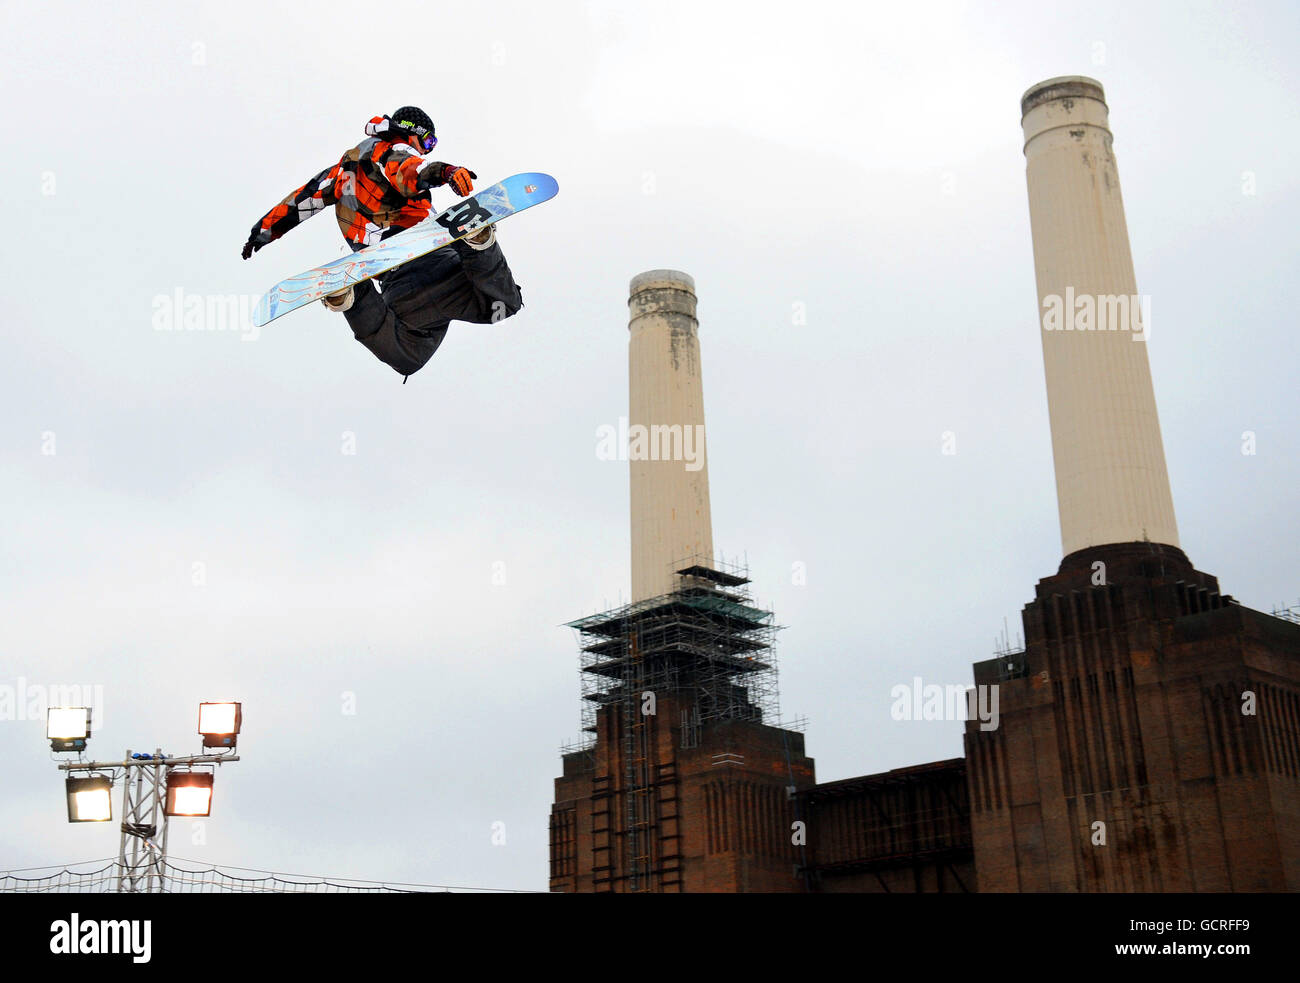 Un snowboarder libre practica en el Festival Relentless Freeze, Battersea Power Station, Londres. Foto de stock